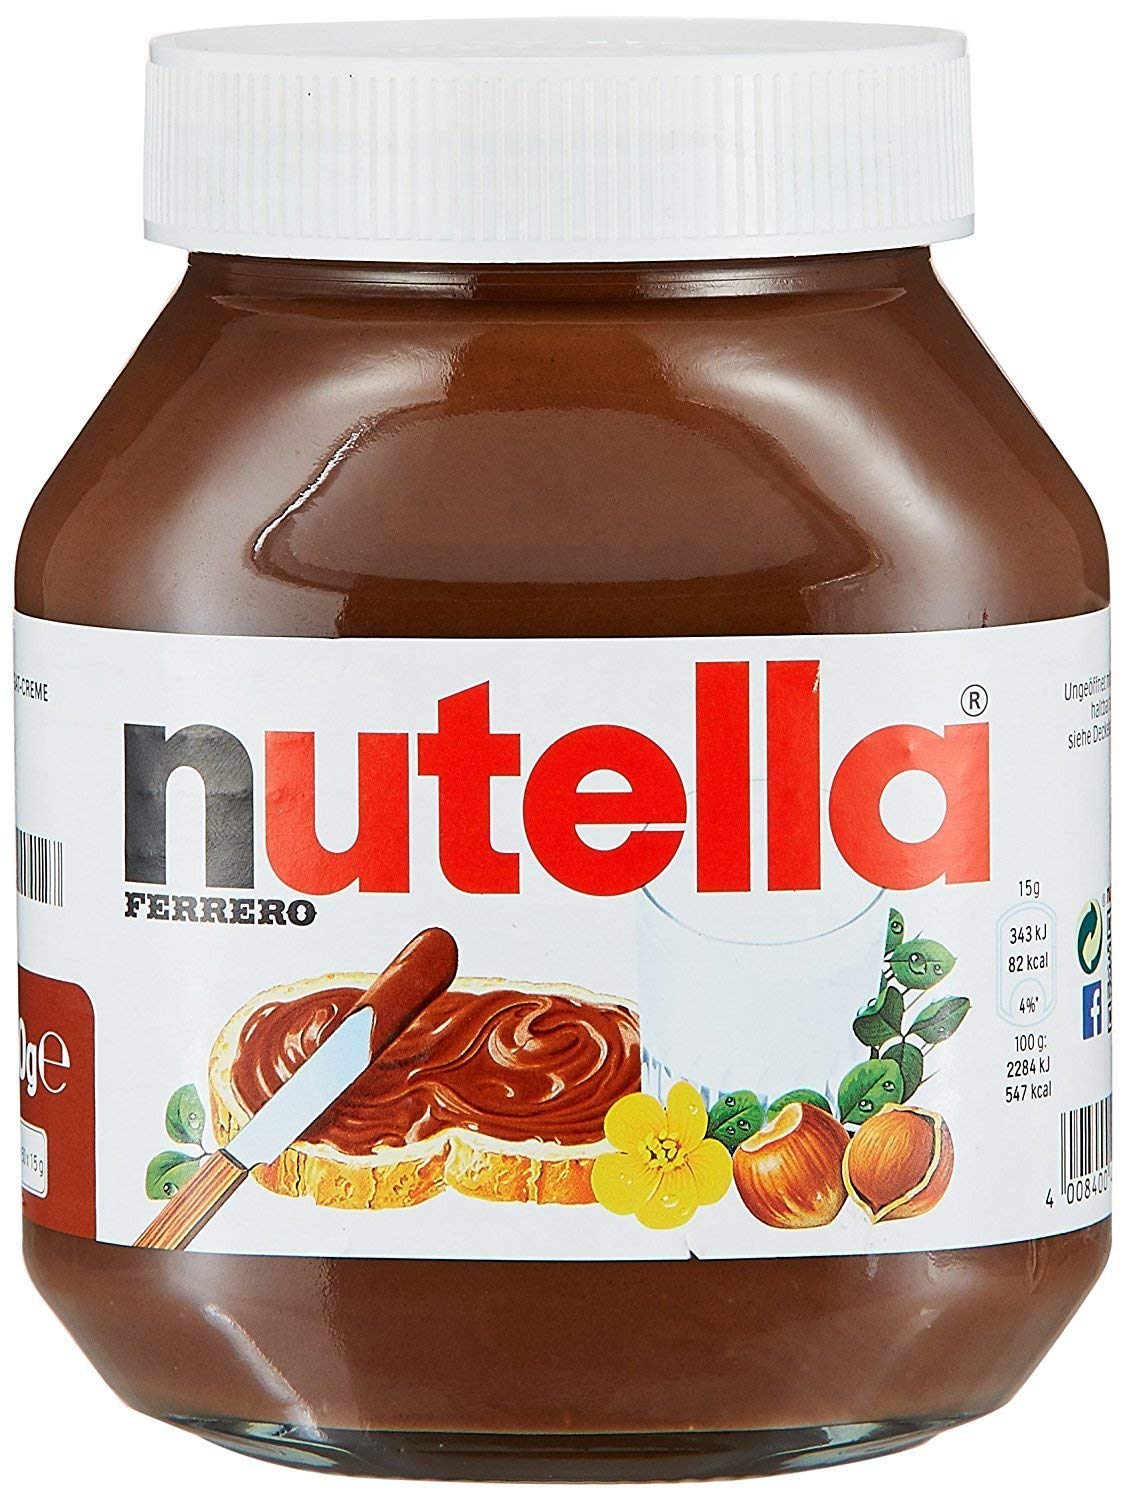 Nutella Chocolate Hazelnut Spread Image